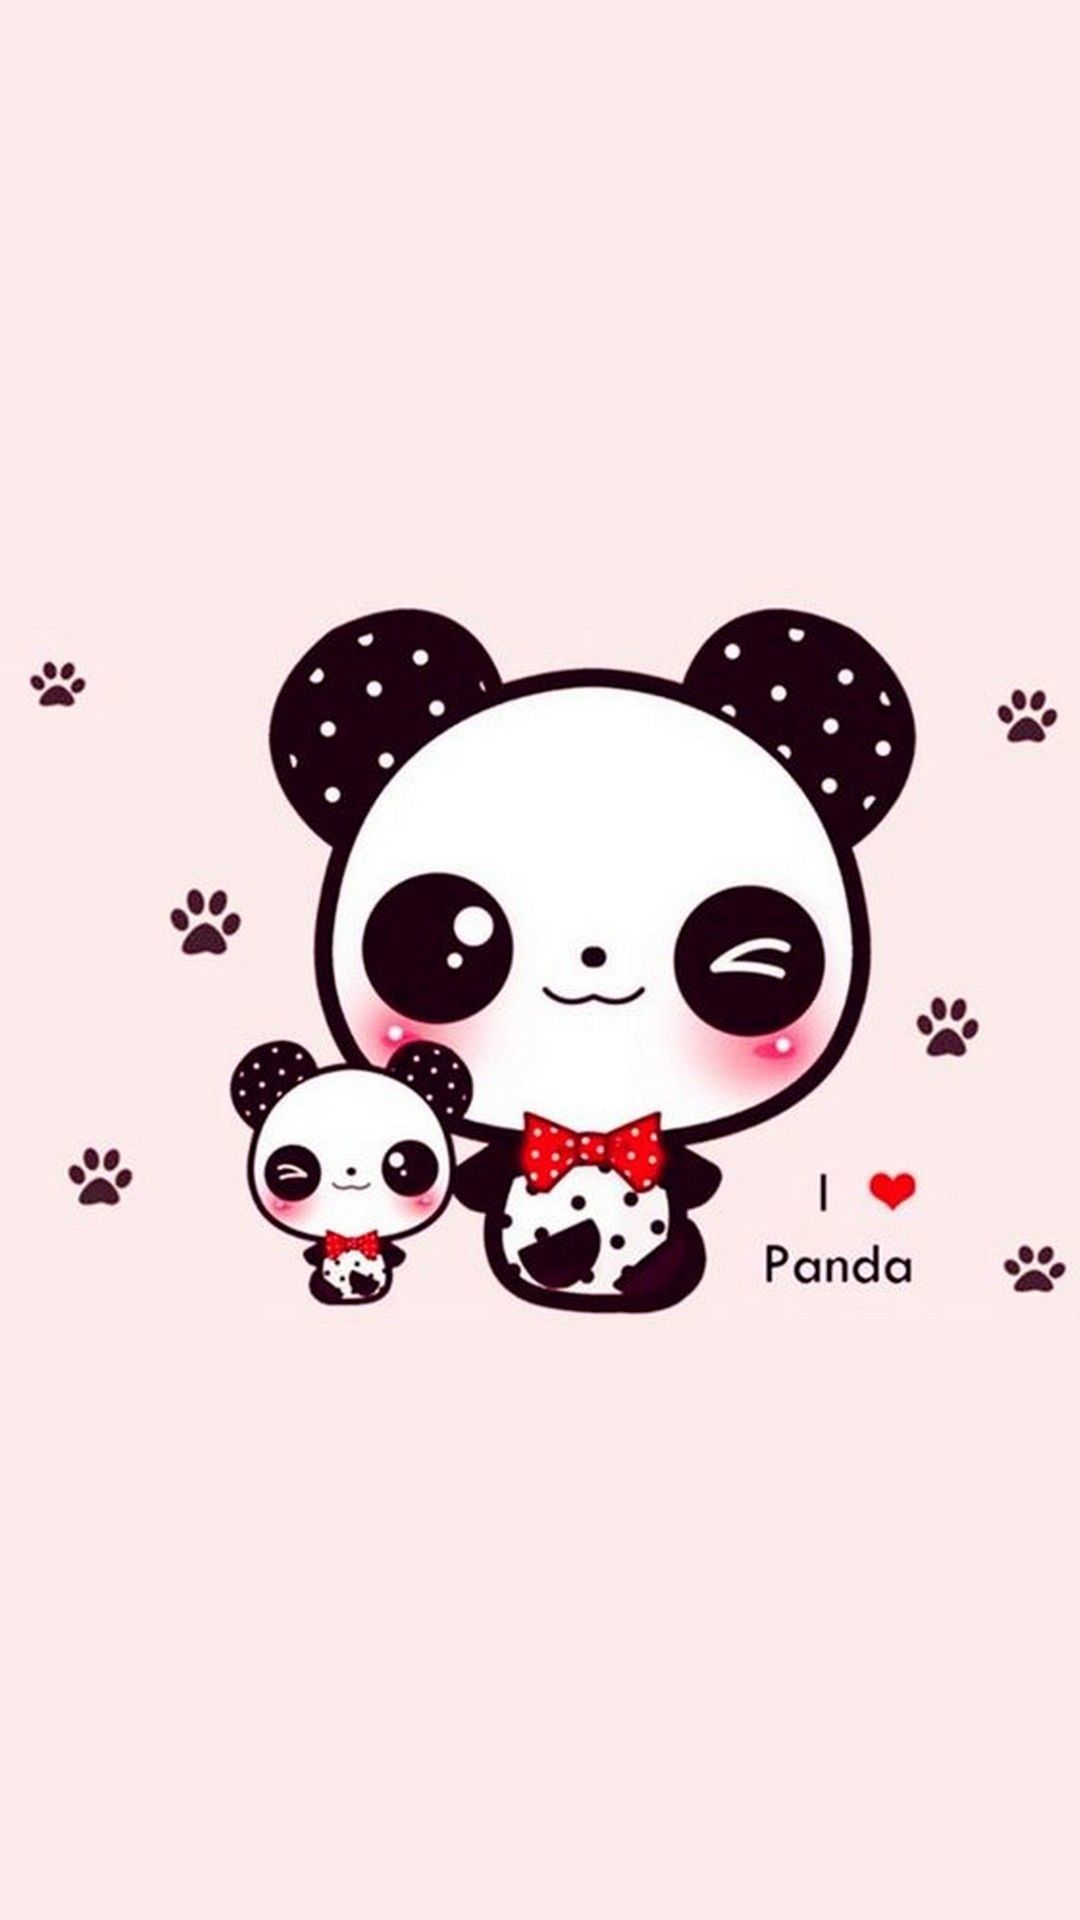 Wallpaper paylaşımları - Cute Panda Wallpaper For Android | Best HD  Wallpapers | Facebook